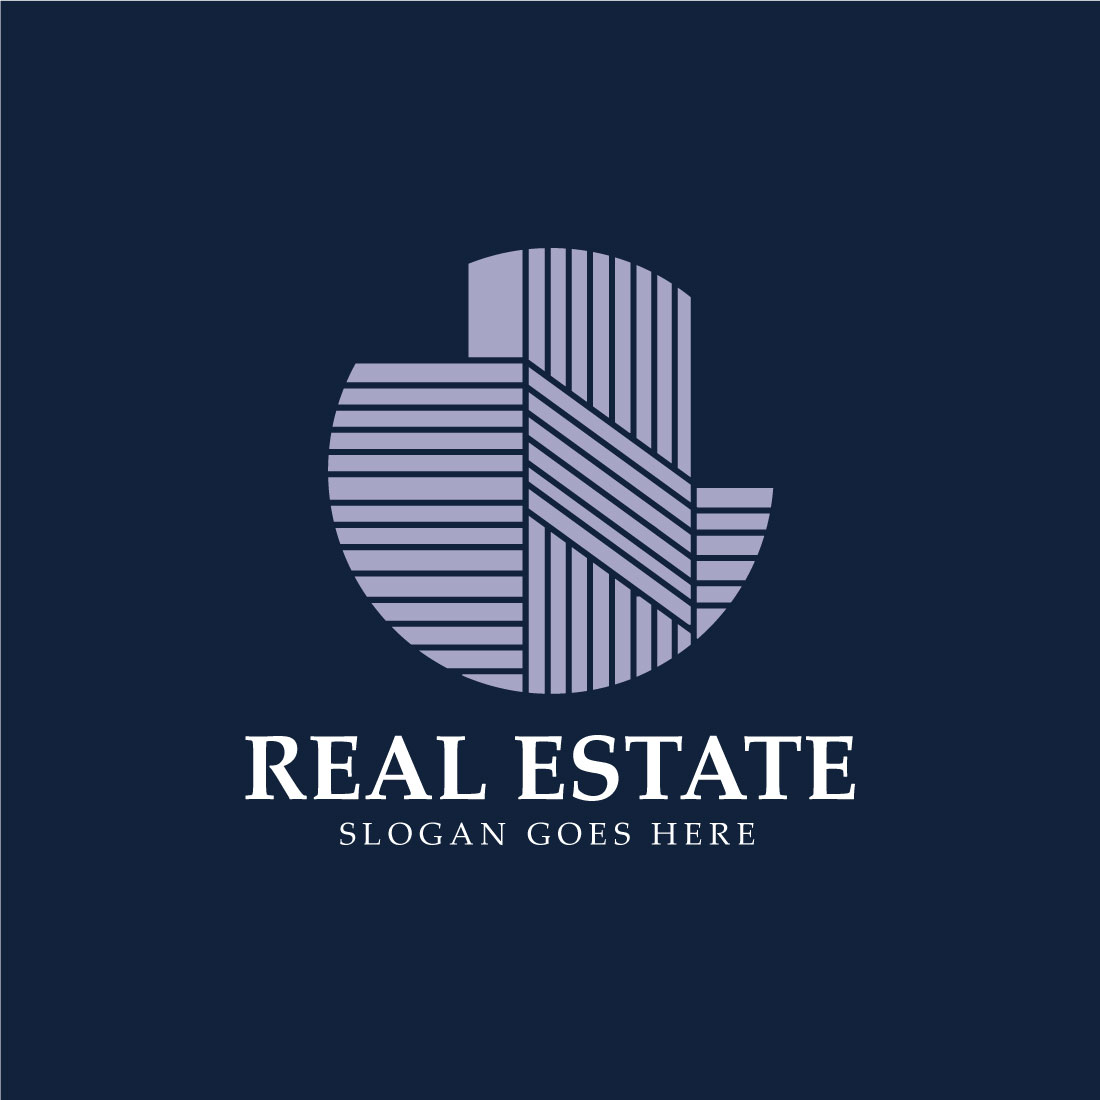 Initial building real estate logo design preview image.